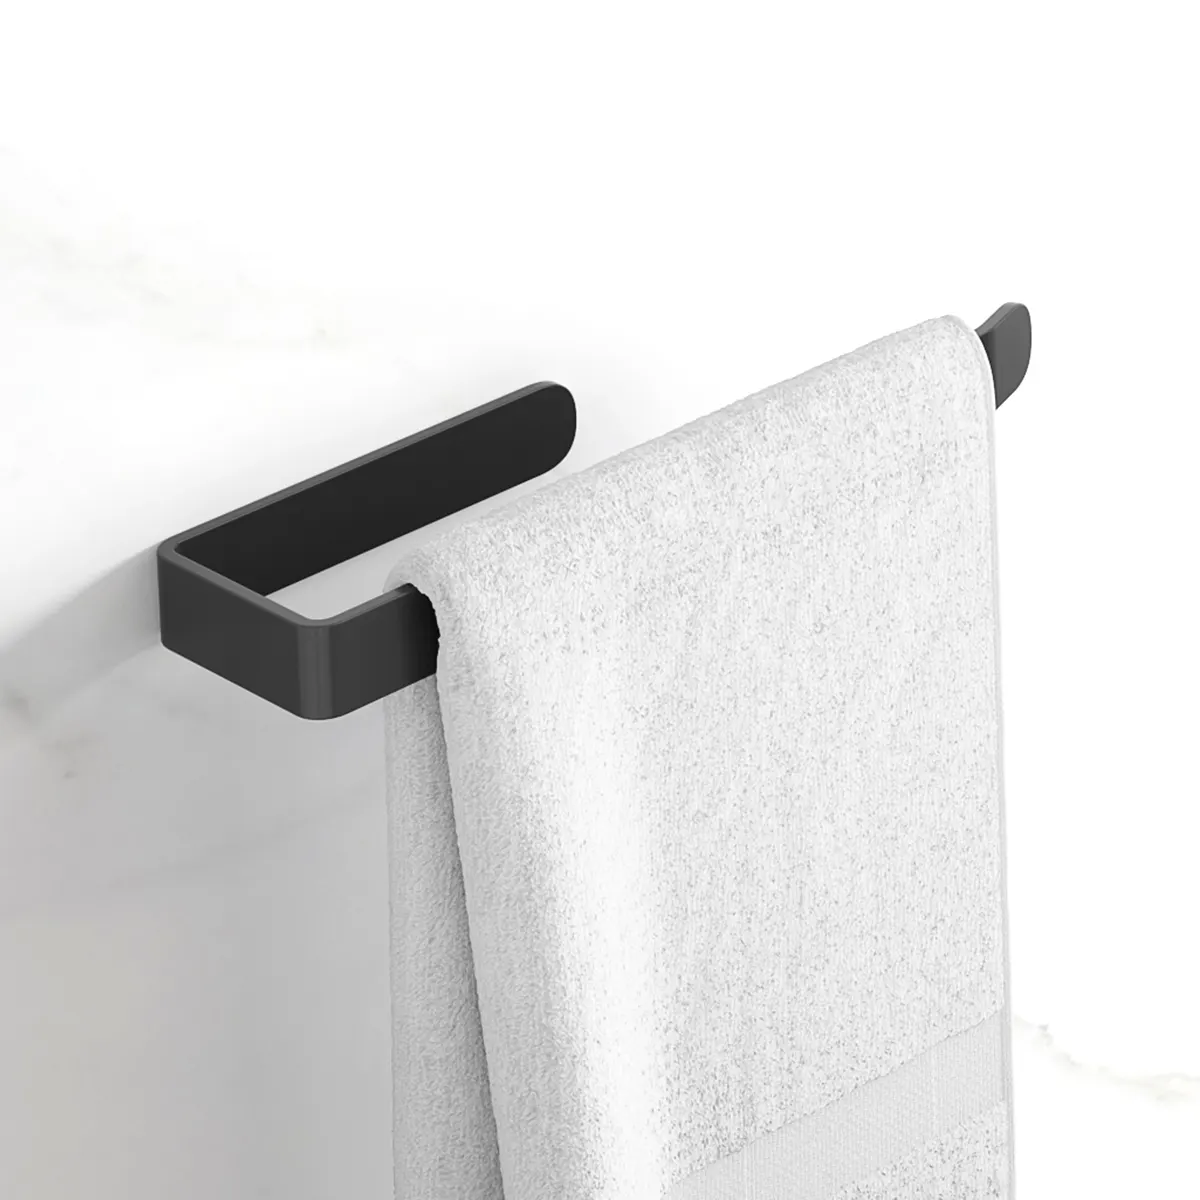 Bathroom Modern Aluminum Single Towel Bar Rack Toilet Towel Rail Holder